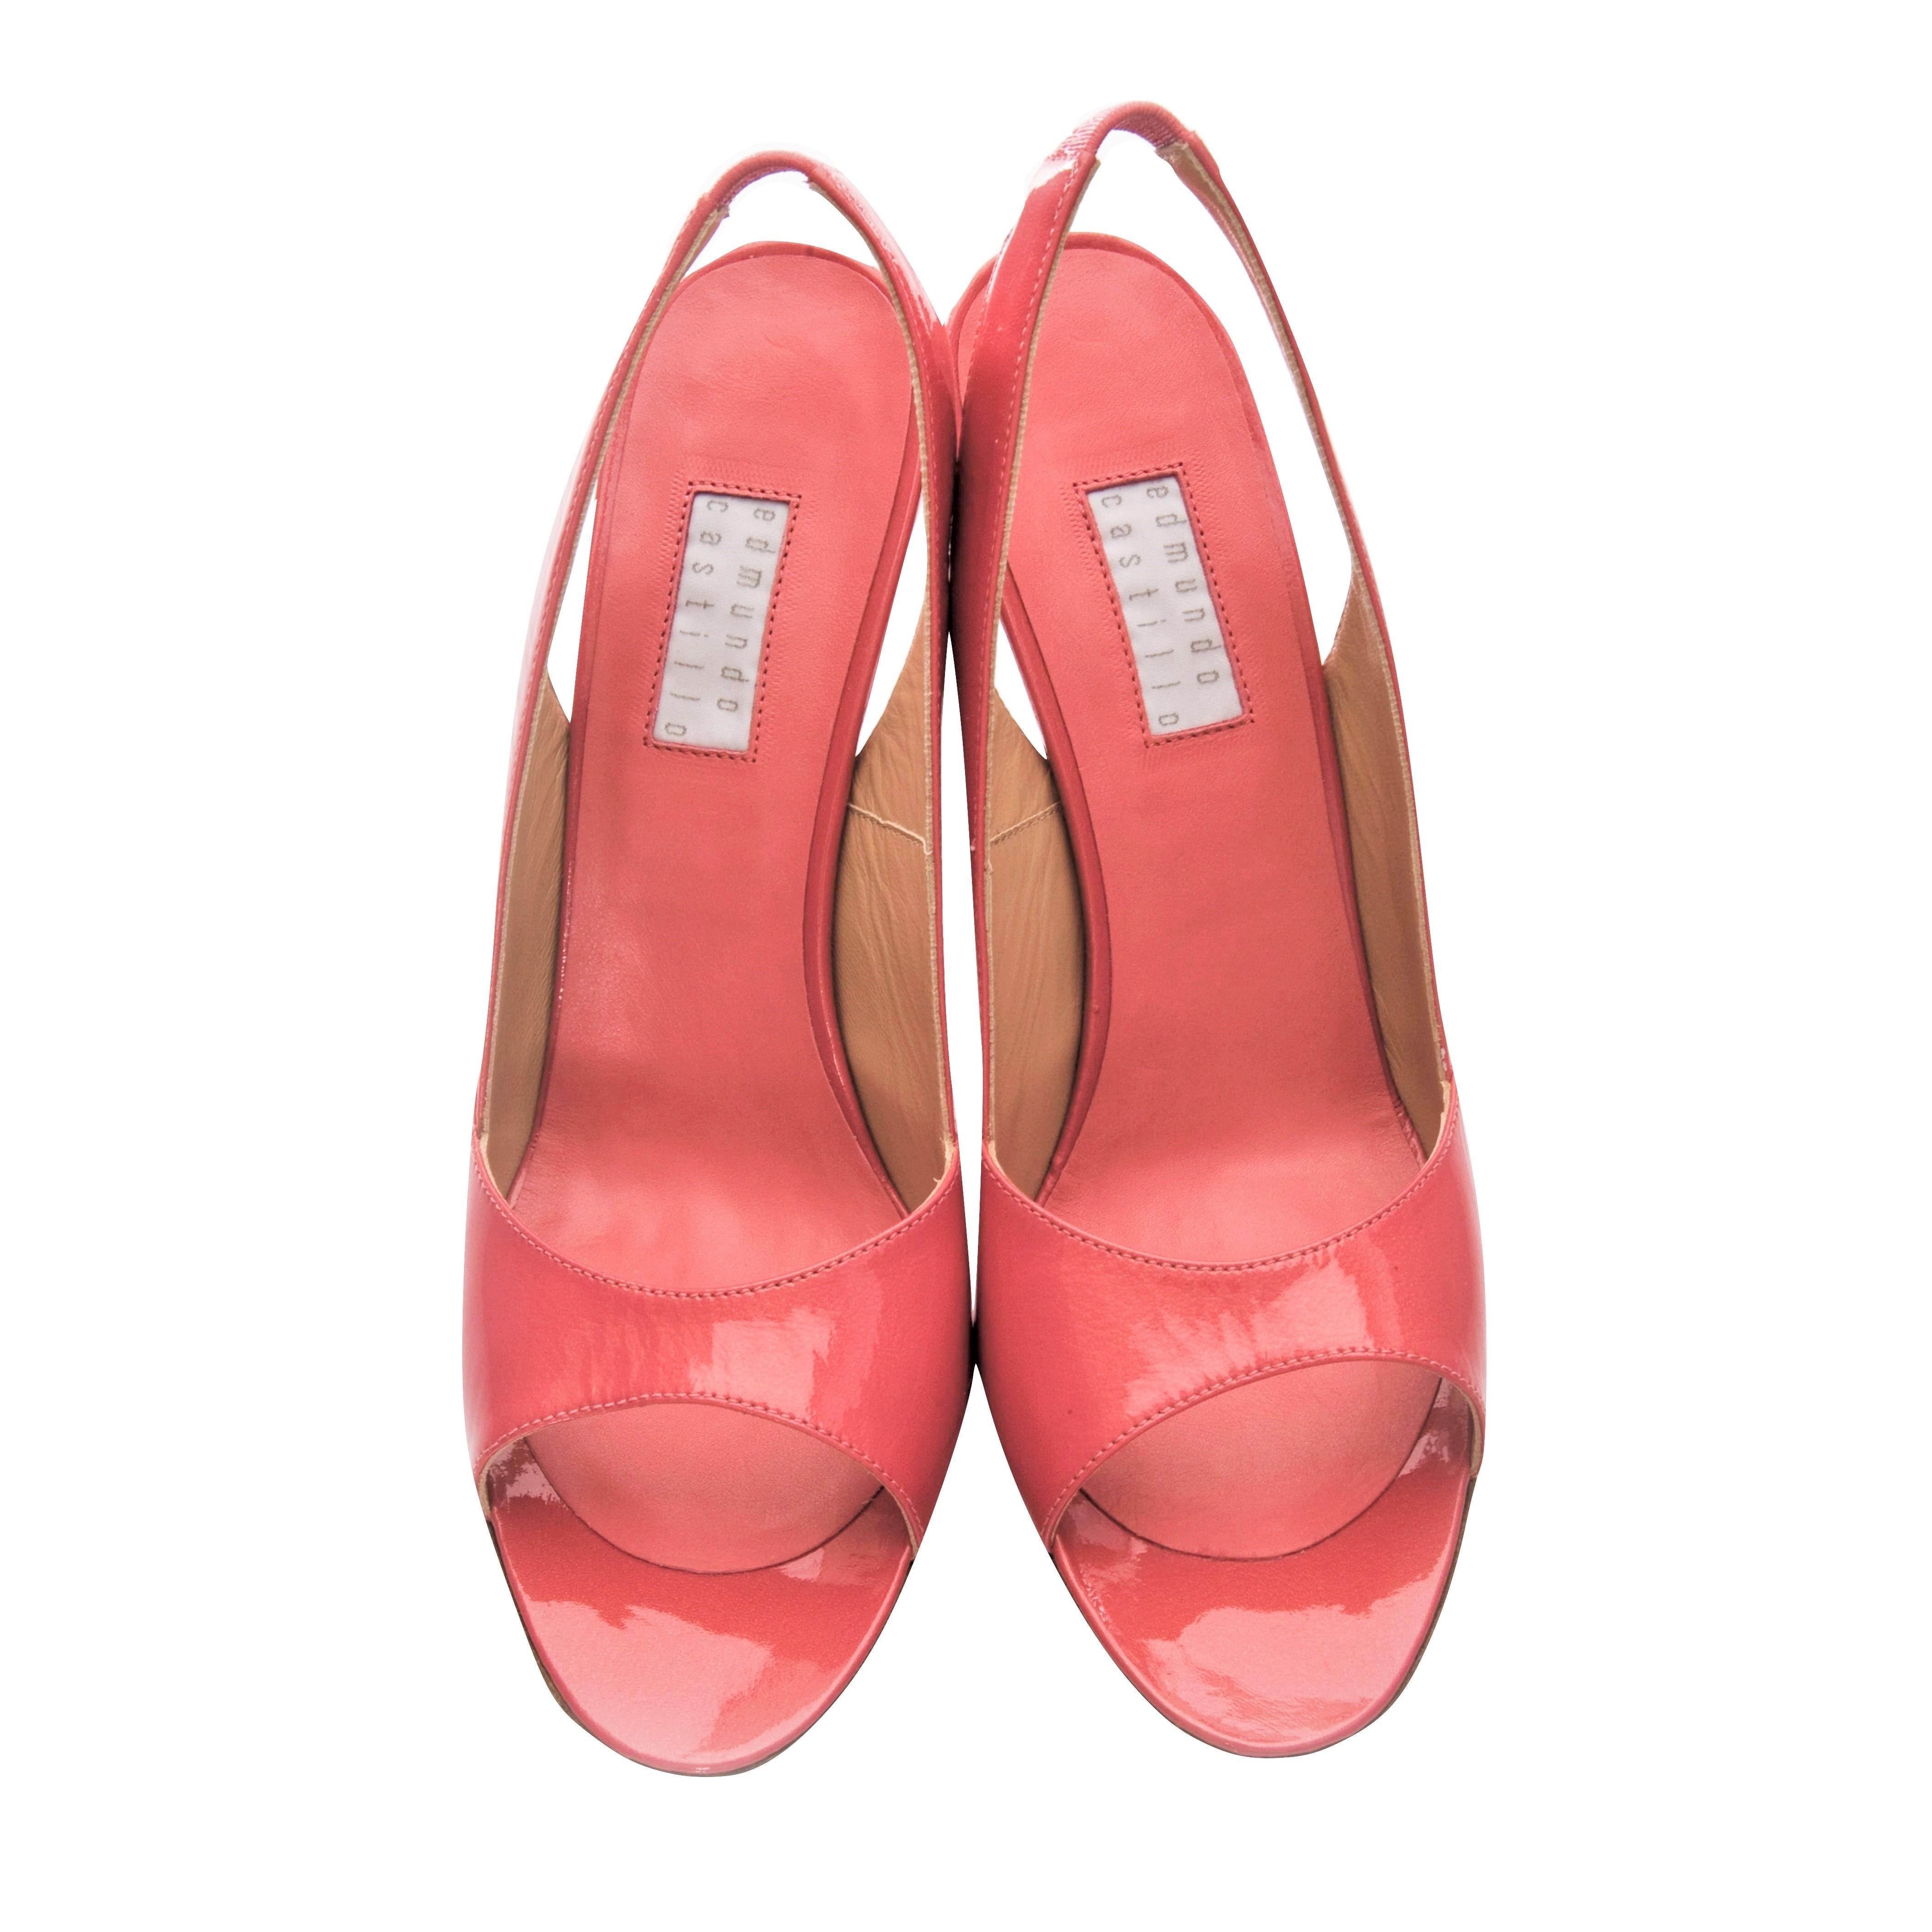 New Edmundo Castillo Coral Patent Leather Sling Heels Sz 7 1